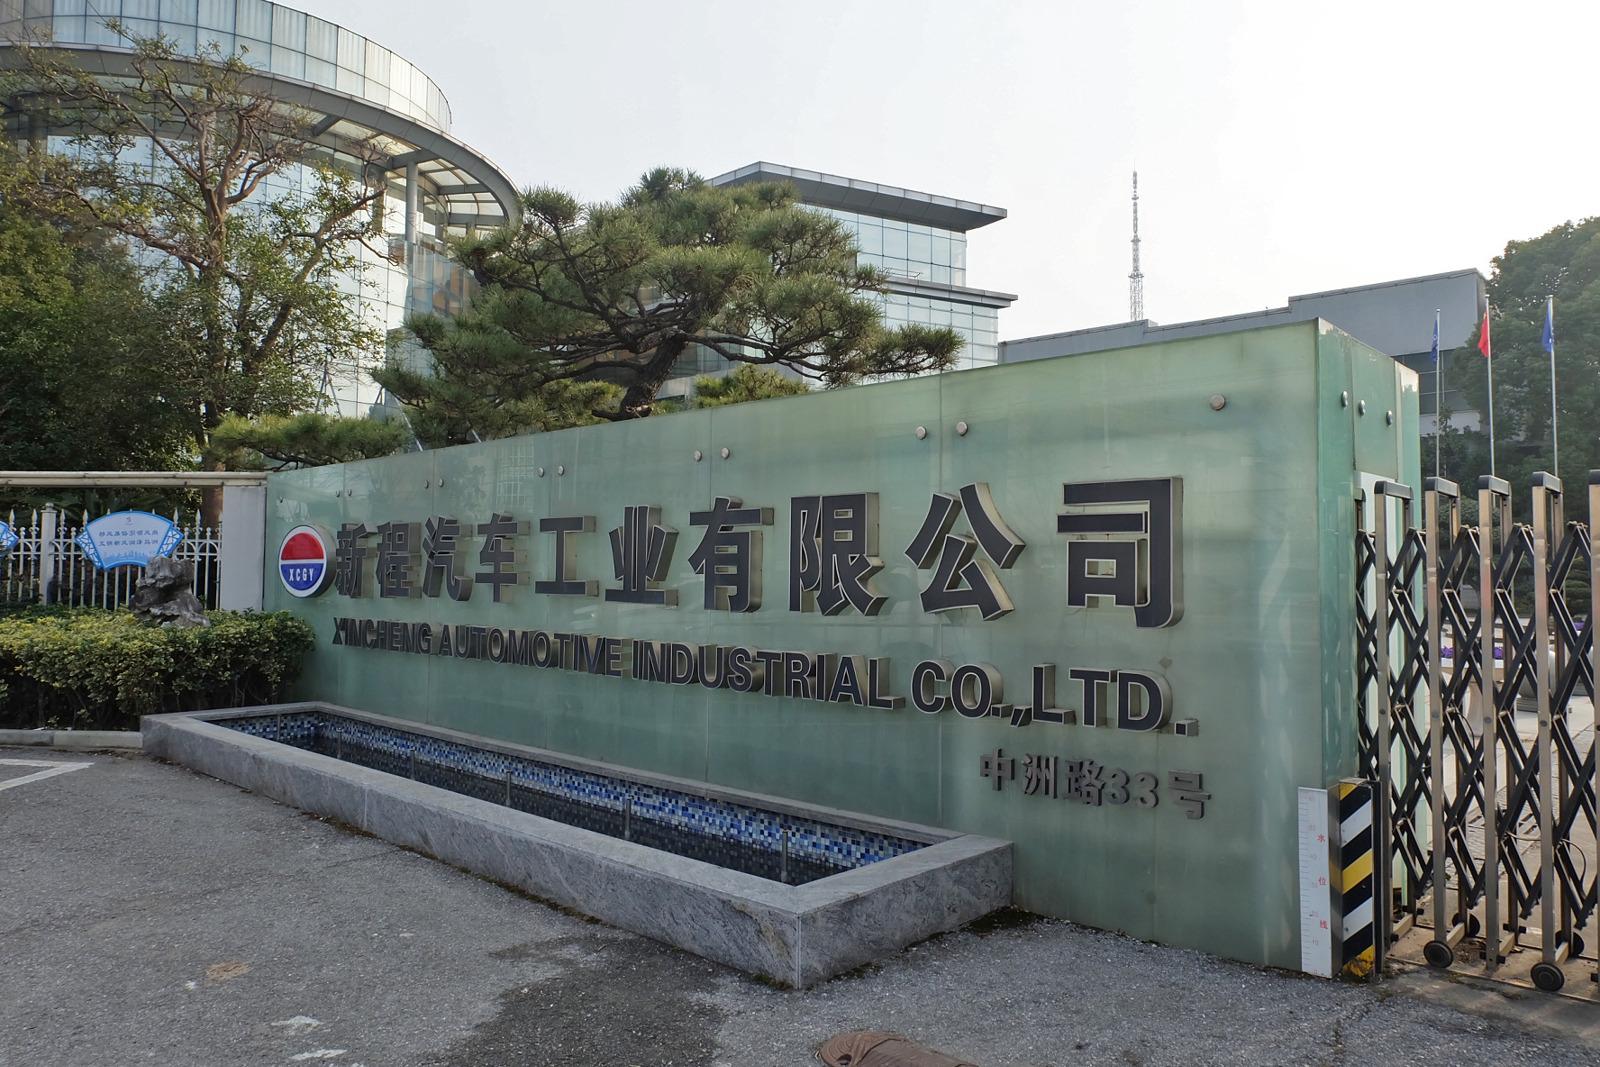 Xincheng Automotive Industrial 社は、武漢工場向けに別のラインを注文。生産容量を大幅拡大見込み。 